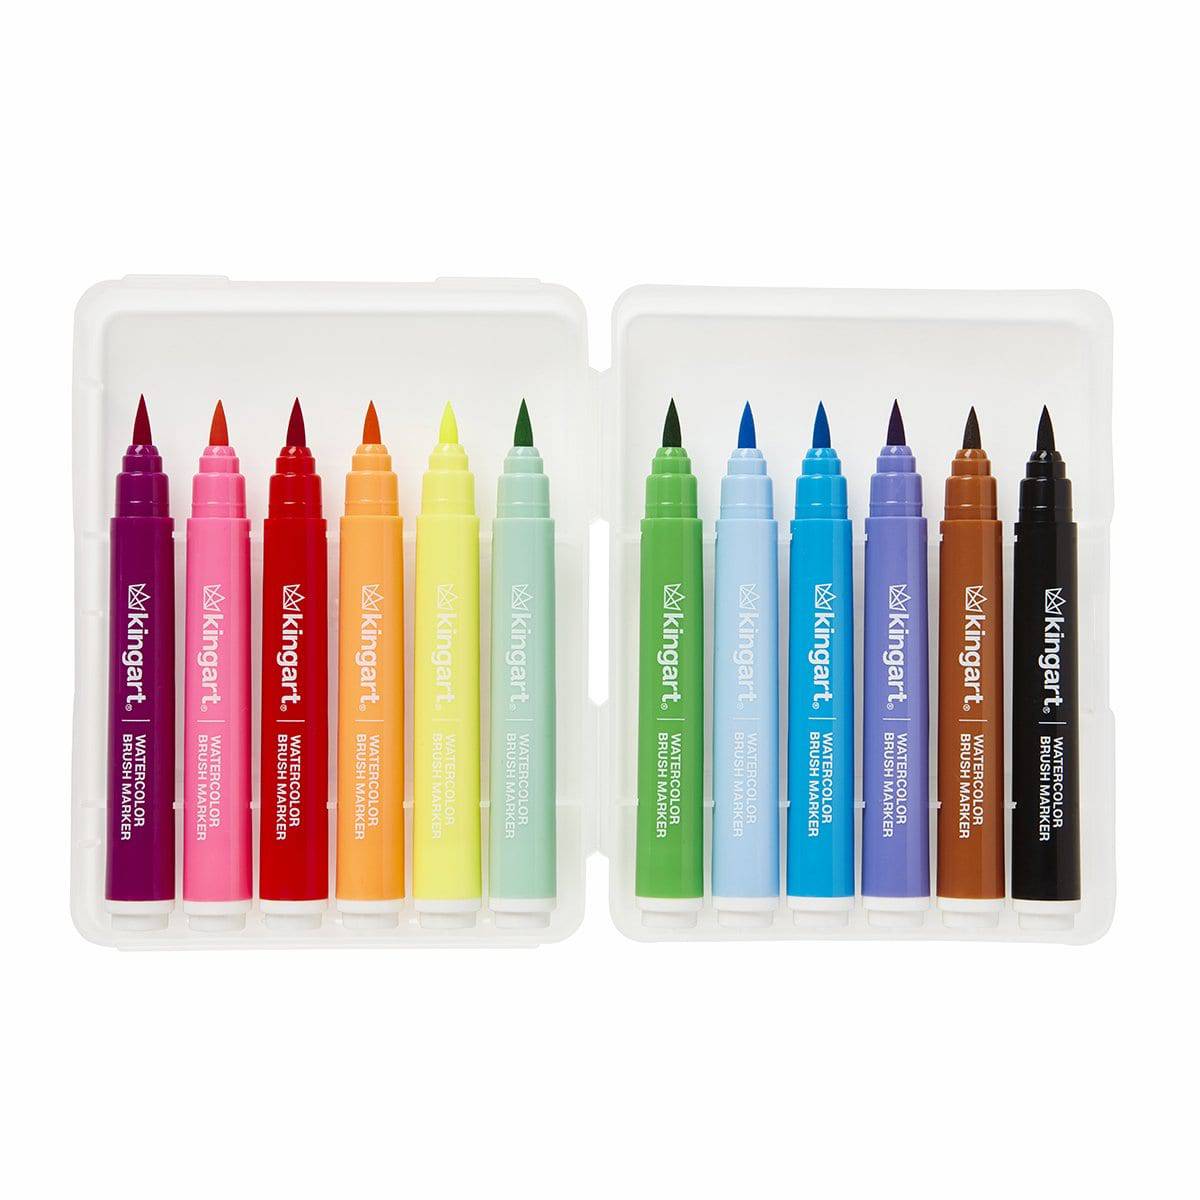 KINGART® Twin-Tip™ Sketch Markers, Set of 60 Unique & Vivid Colors